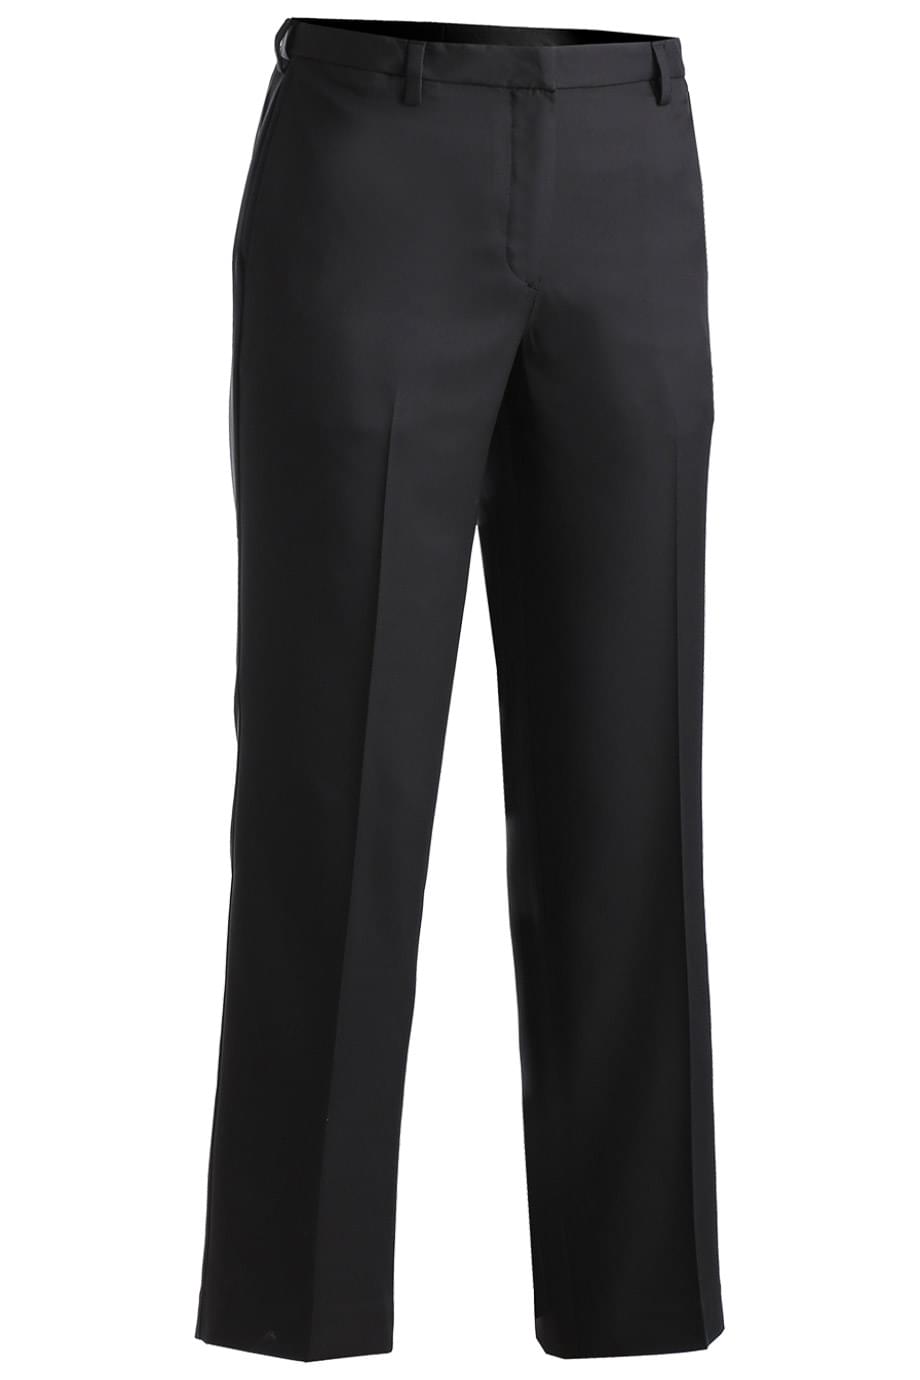 ED Garments Mens Business Casual Flat Front Brass Zipper Pant 